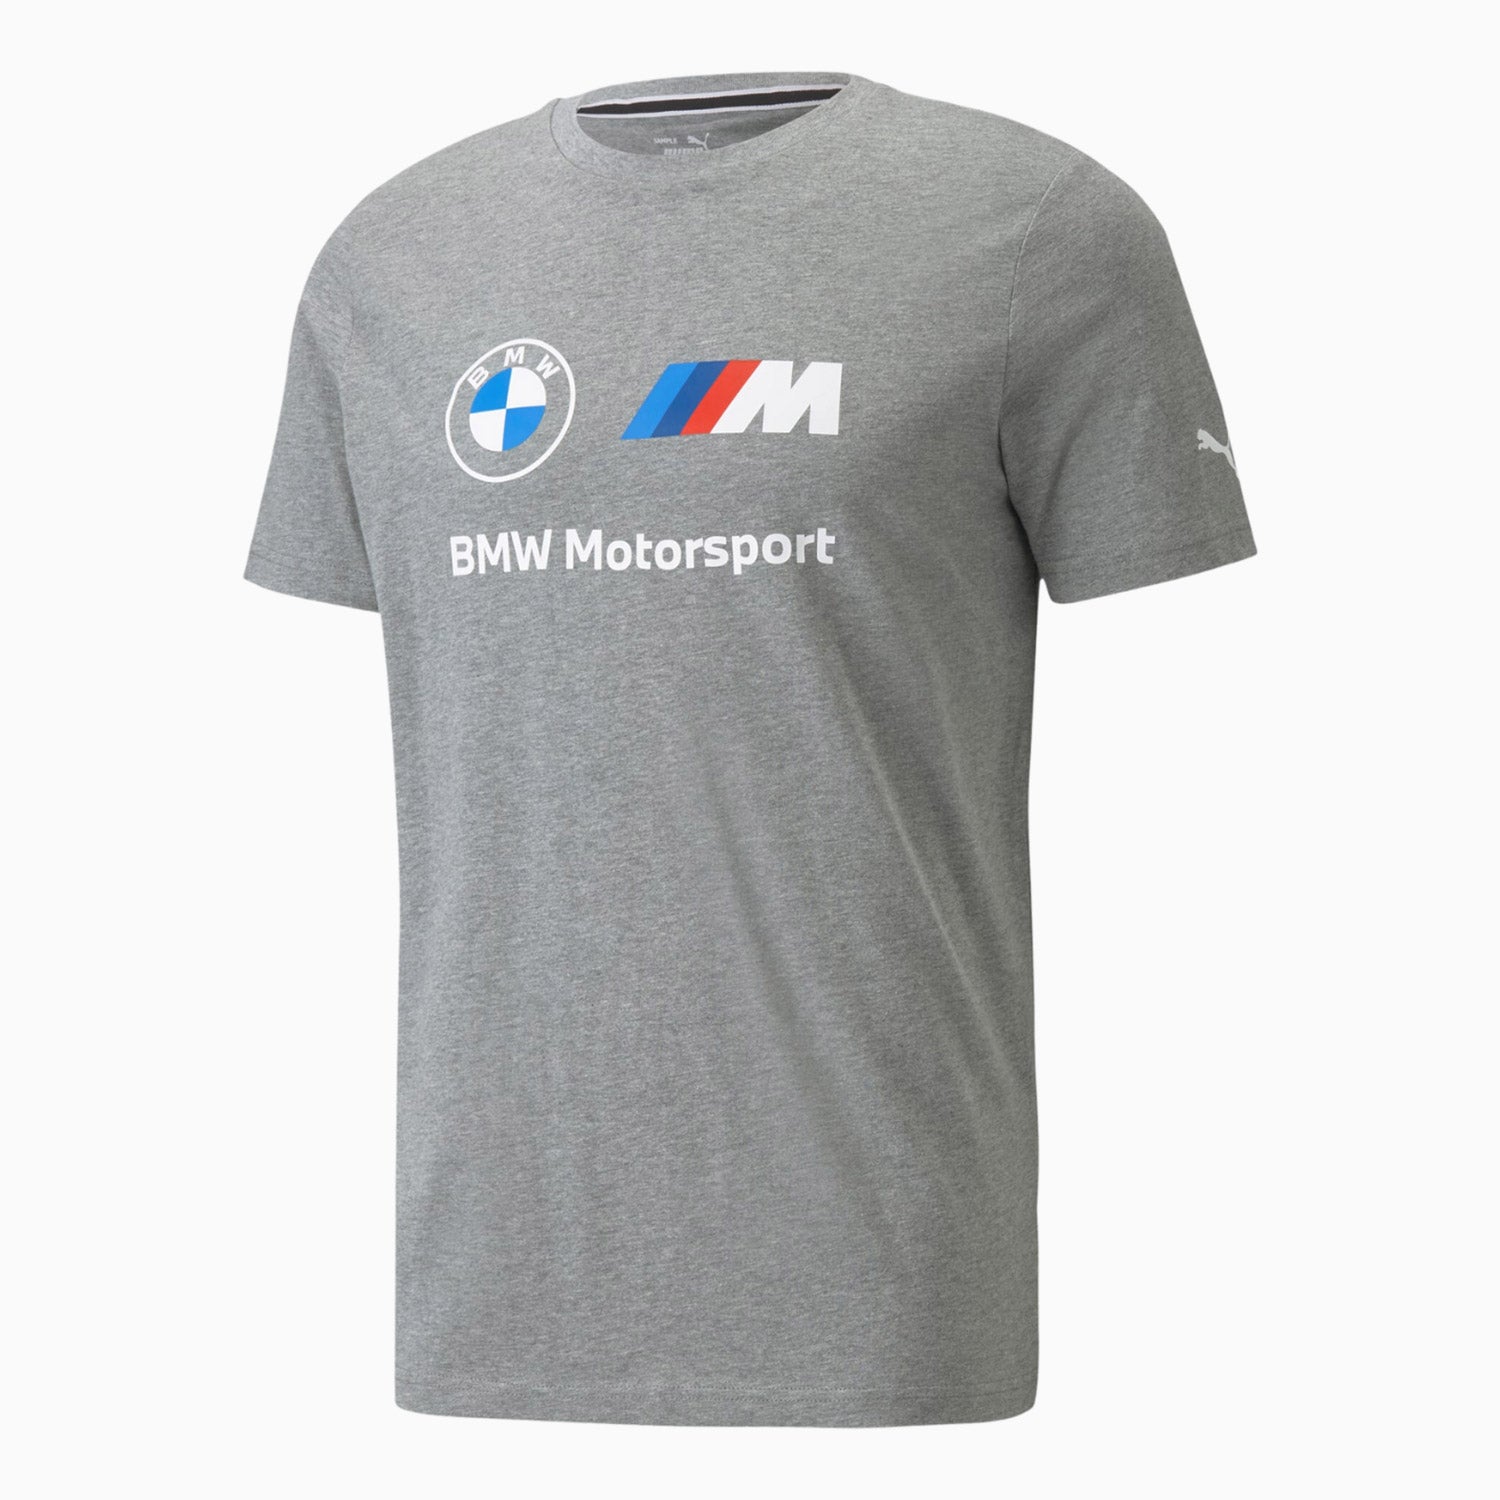 puma-mens-bmw-motorsport-essential-logo-outfit-532253-03-533410-03